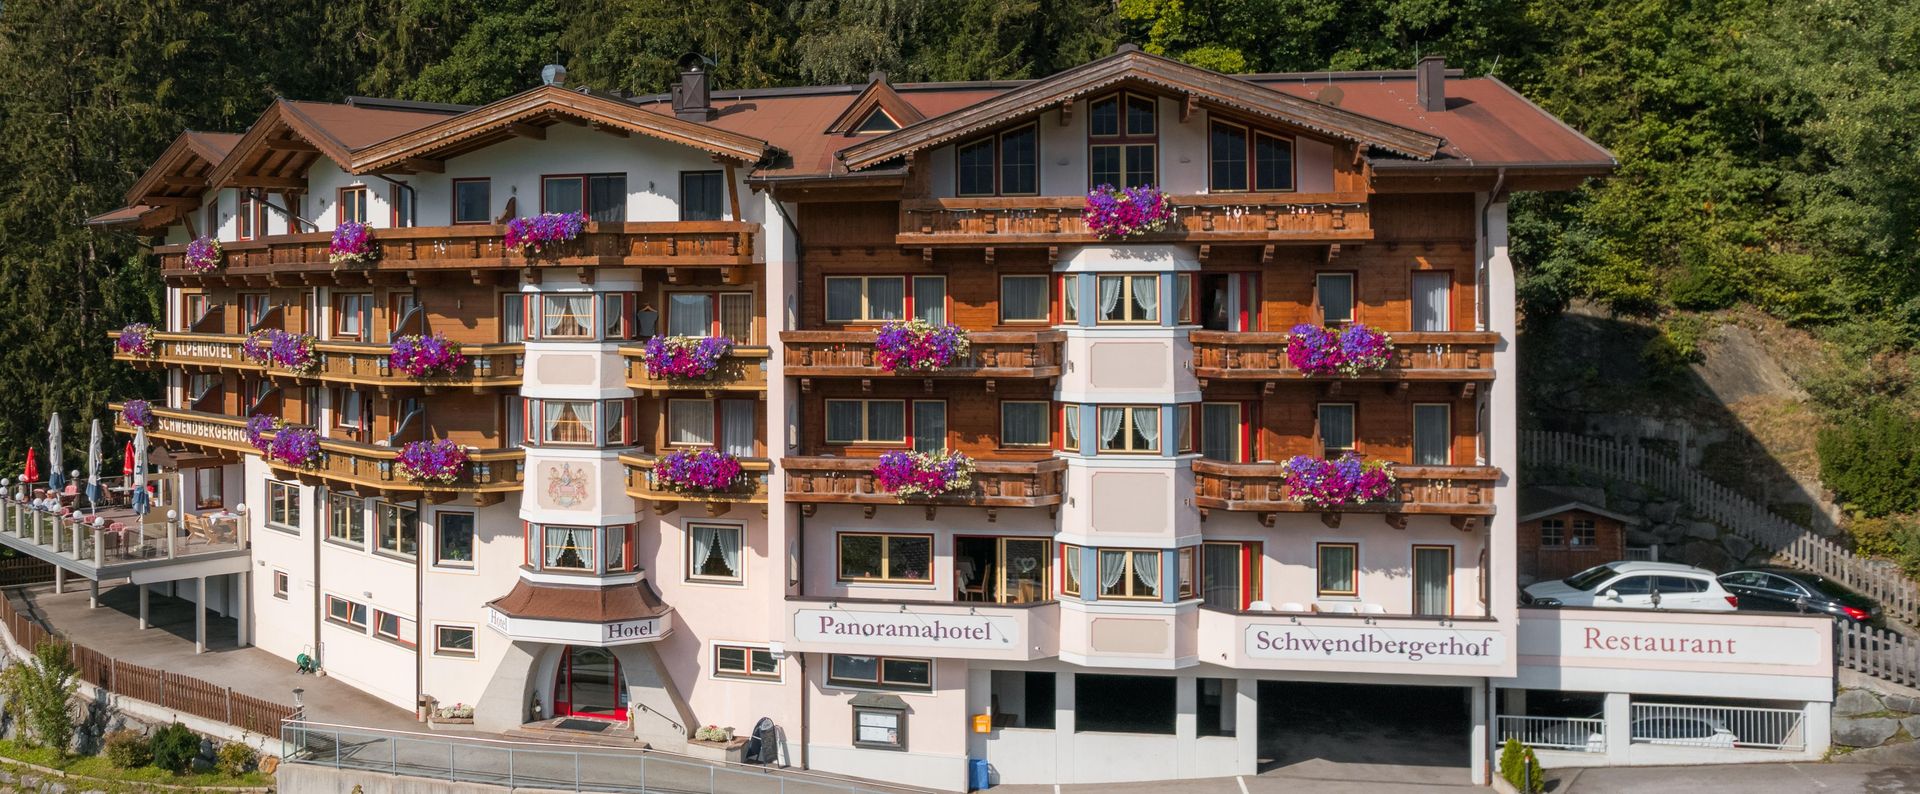 Panoramahotel Schwendbergerhof in Hippach (Zillertal), Panoramahotel Schwendbergerhof / Österreich